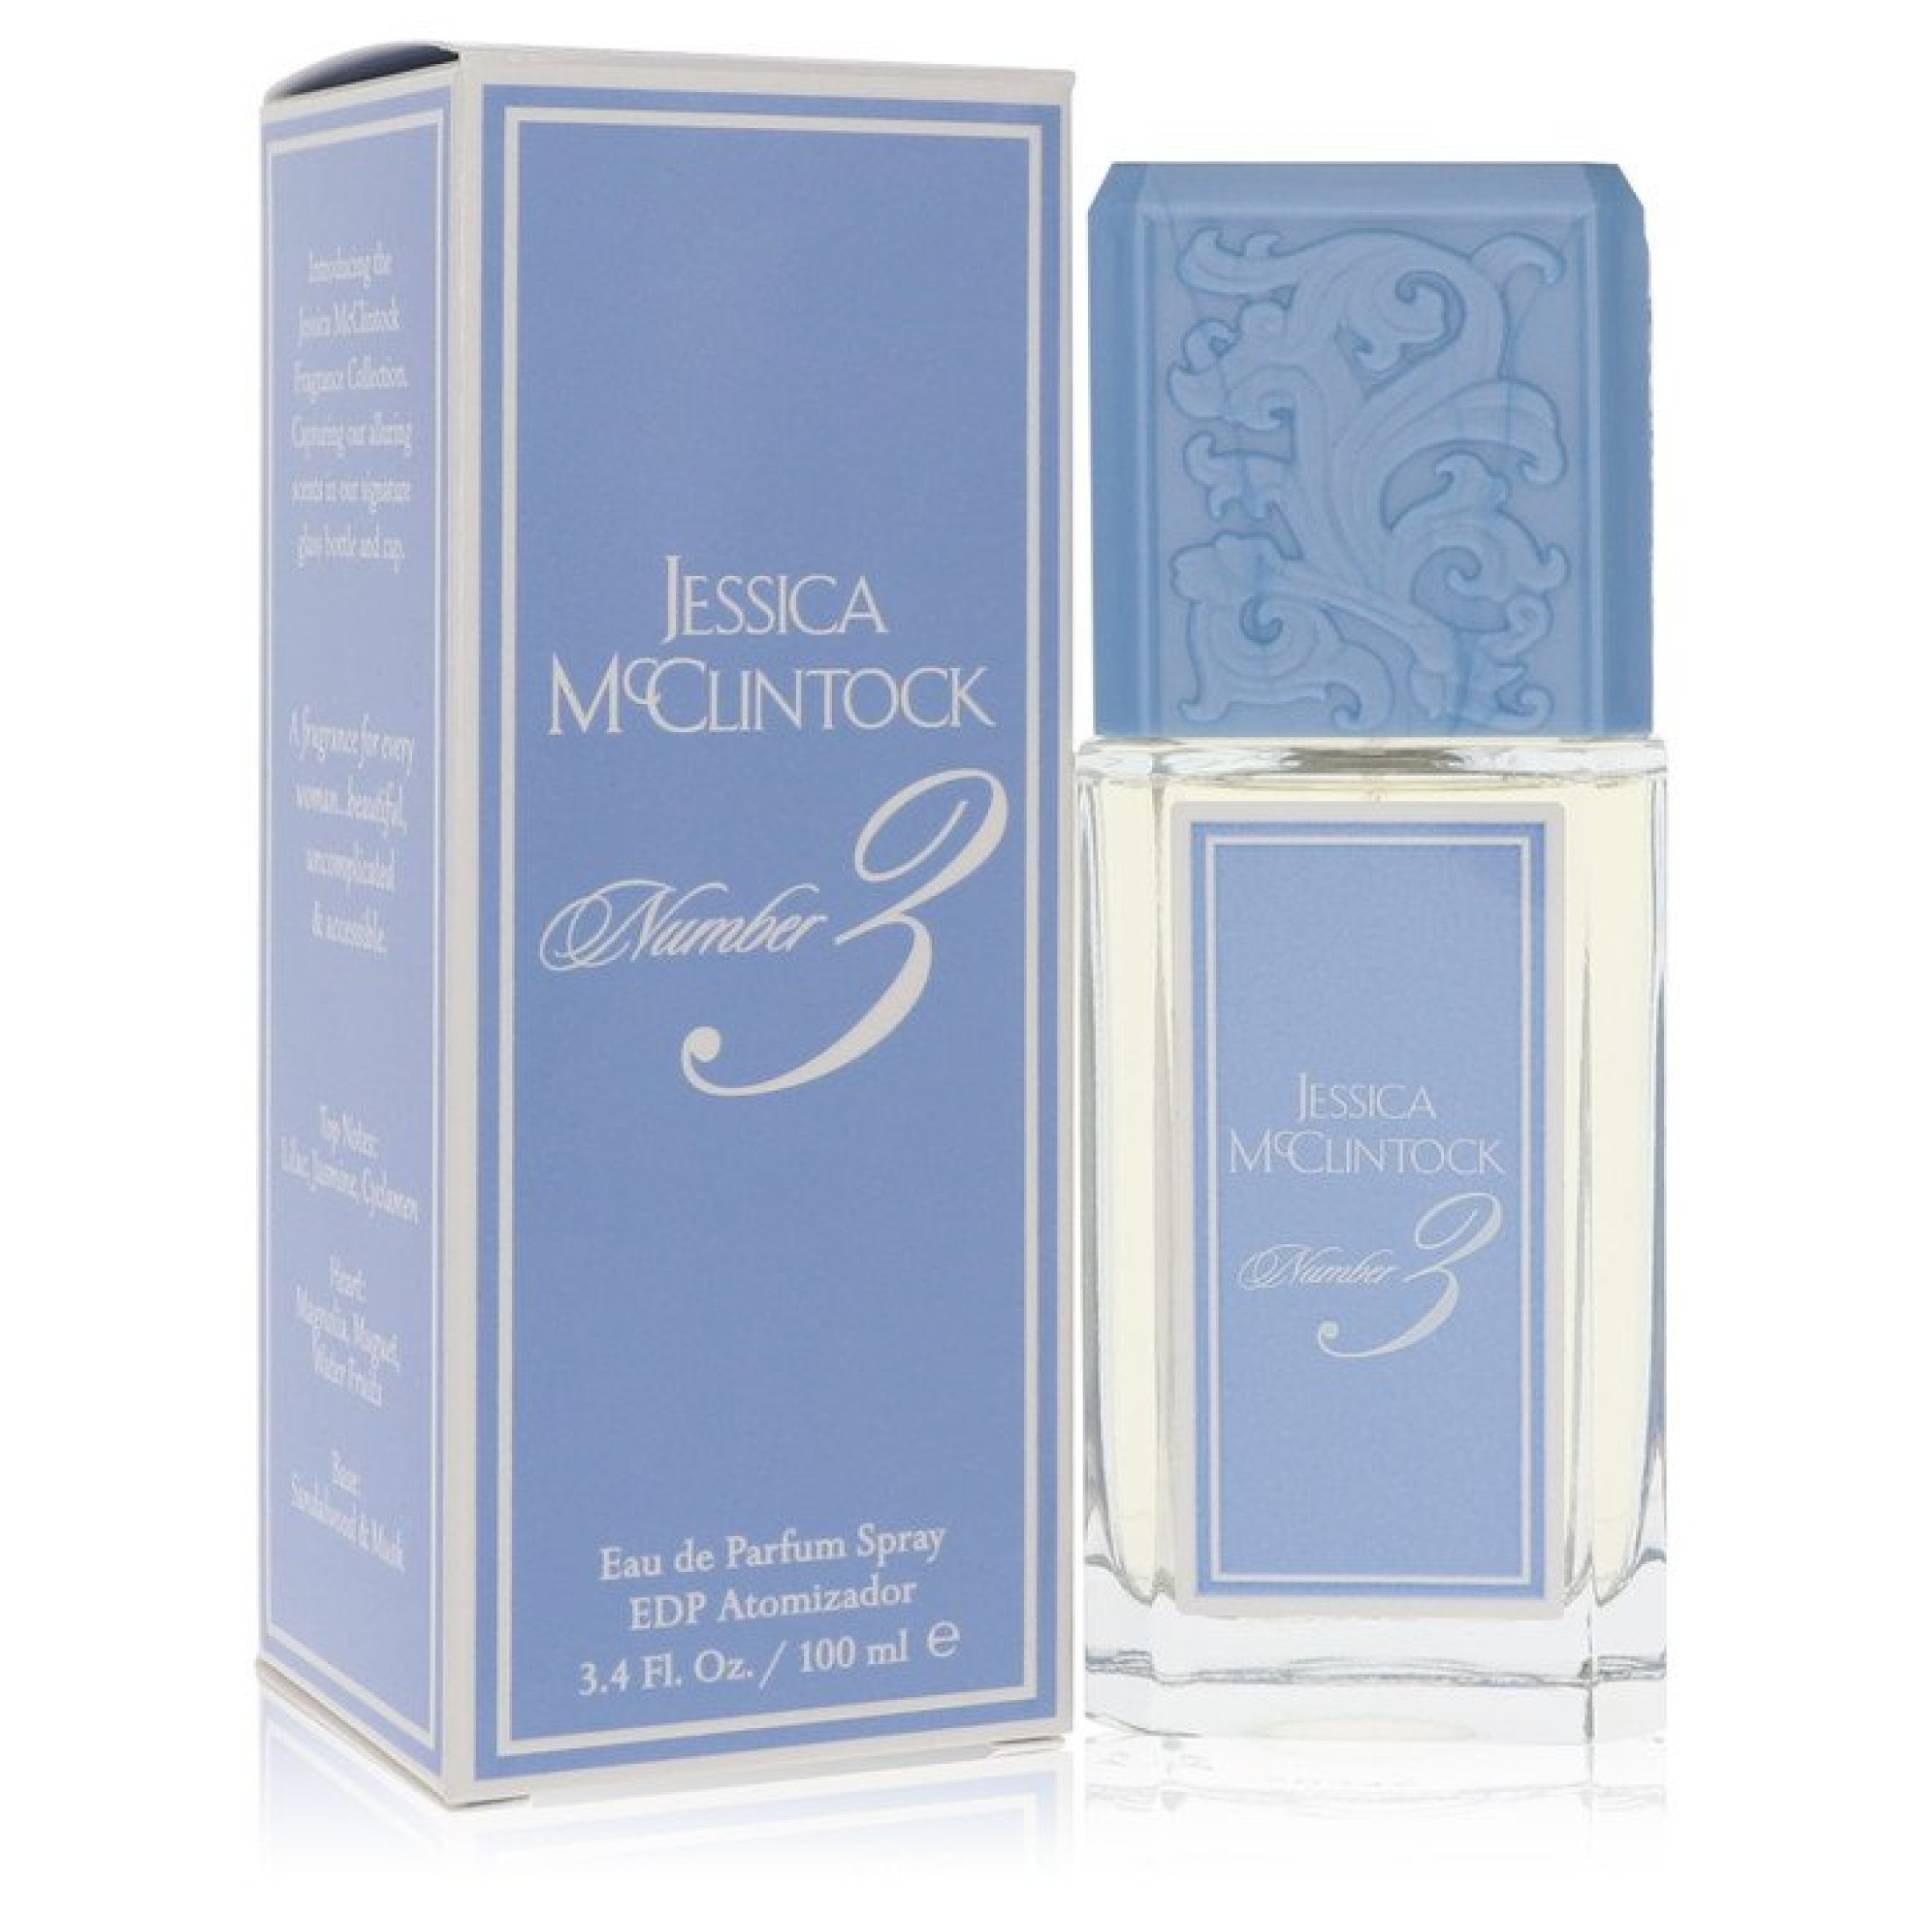 Jessica McClintock JESSICA Mc clintock #3 Eau De Parfum Spray 100 ml von Jessica McClintock